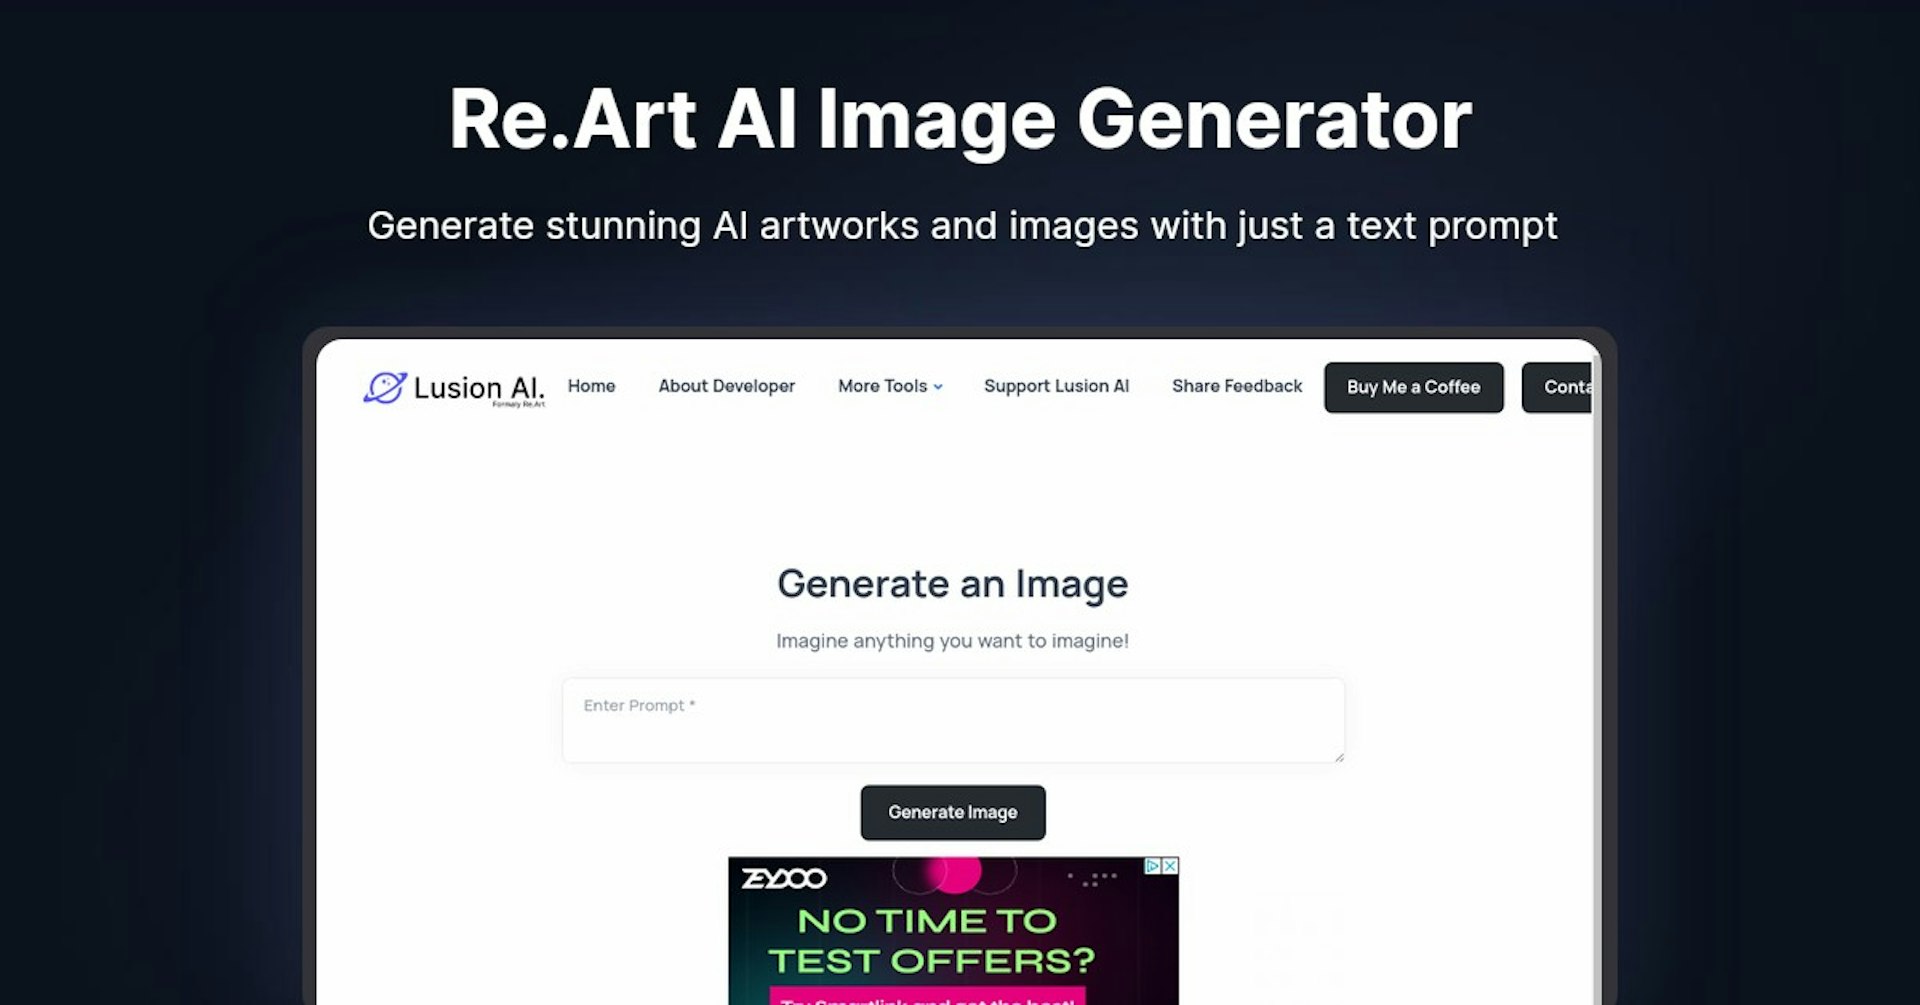 Re.Art AI Image Generator